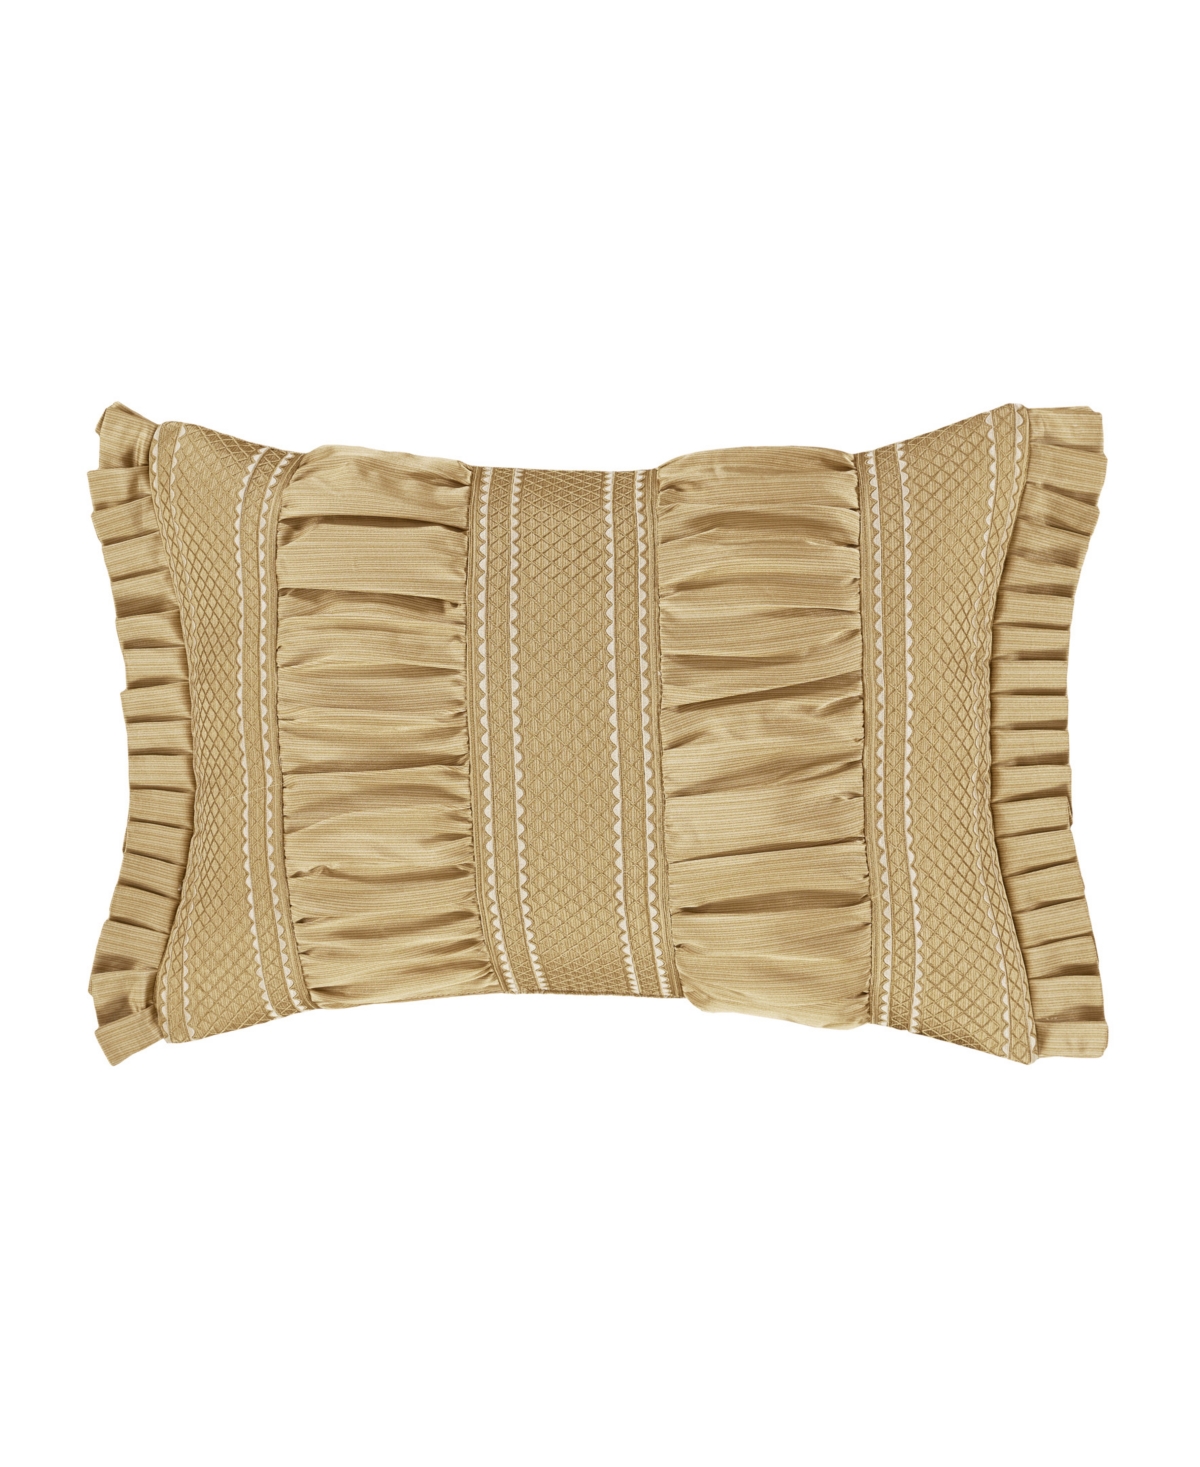 J Queen New York Aurelia Boudoir Decorative Pillow, 15" X 20" In Gold